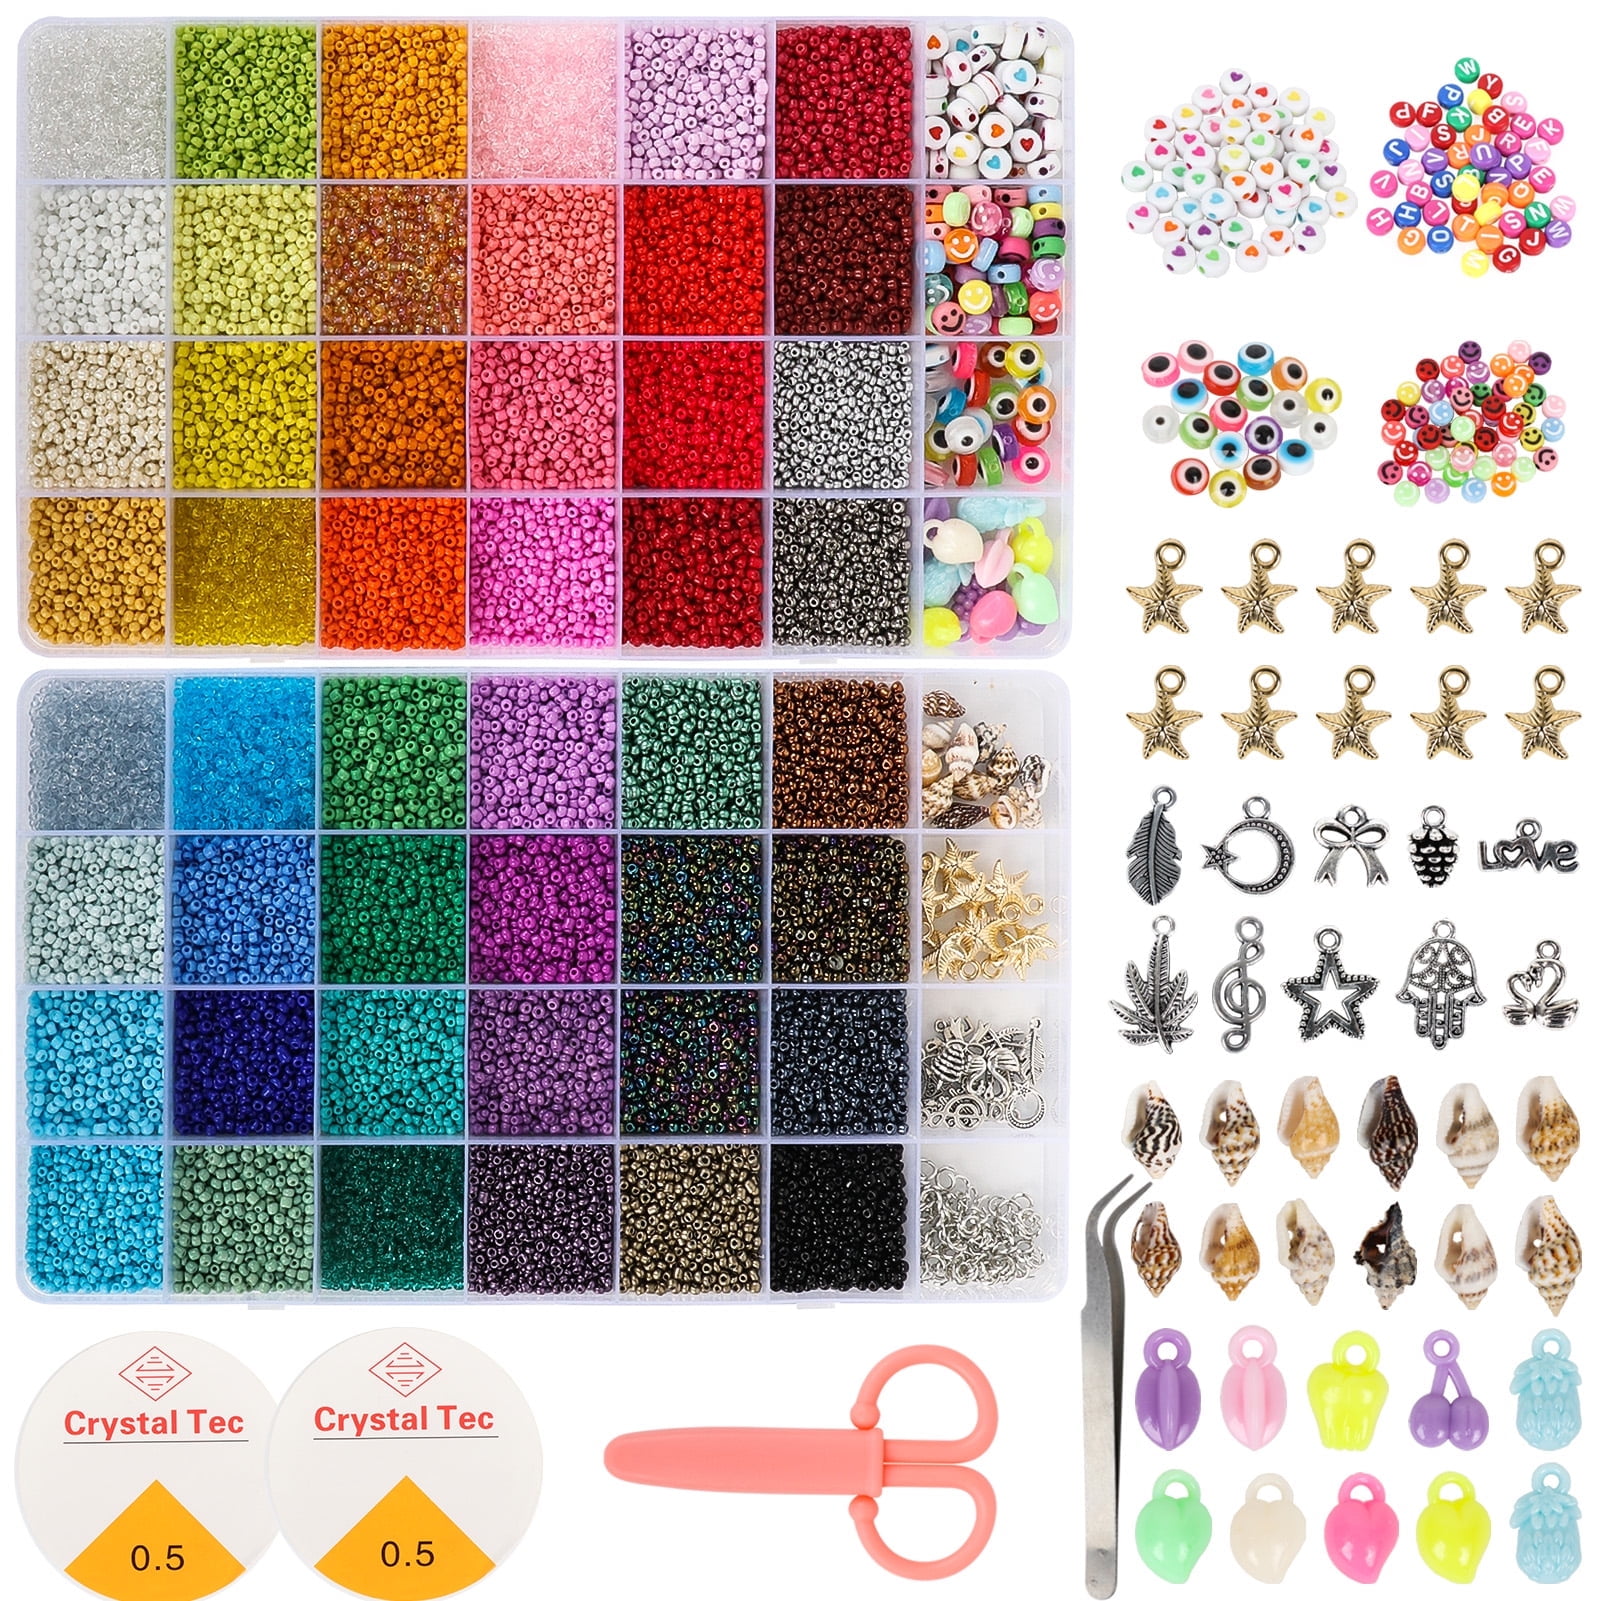 Funtopia 24500+ Pcs Beads for Jewelry Making Kit, Colorful Flat